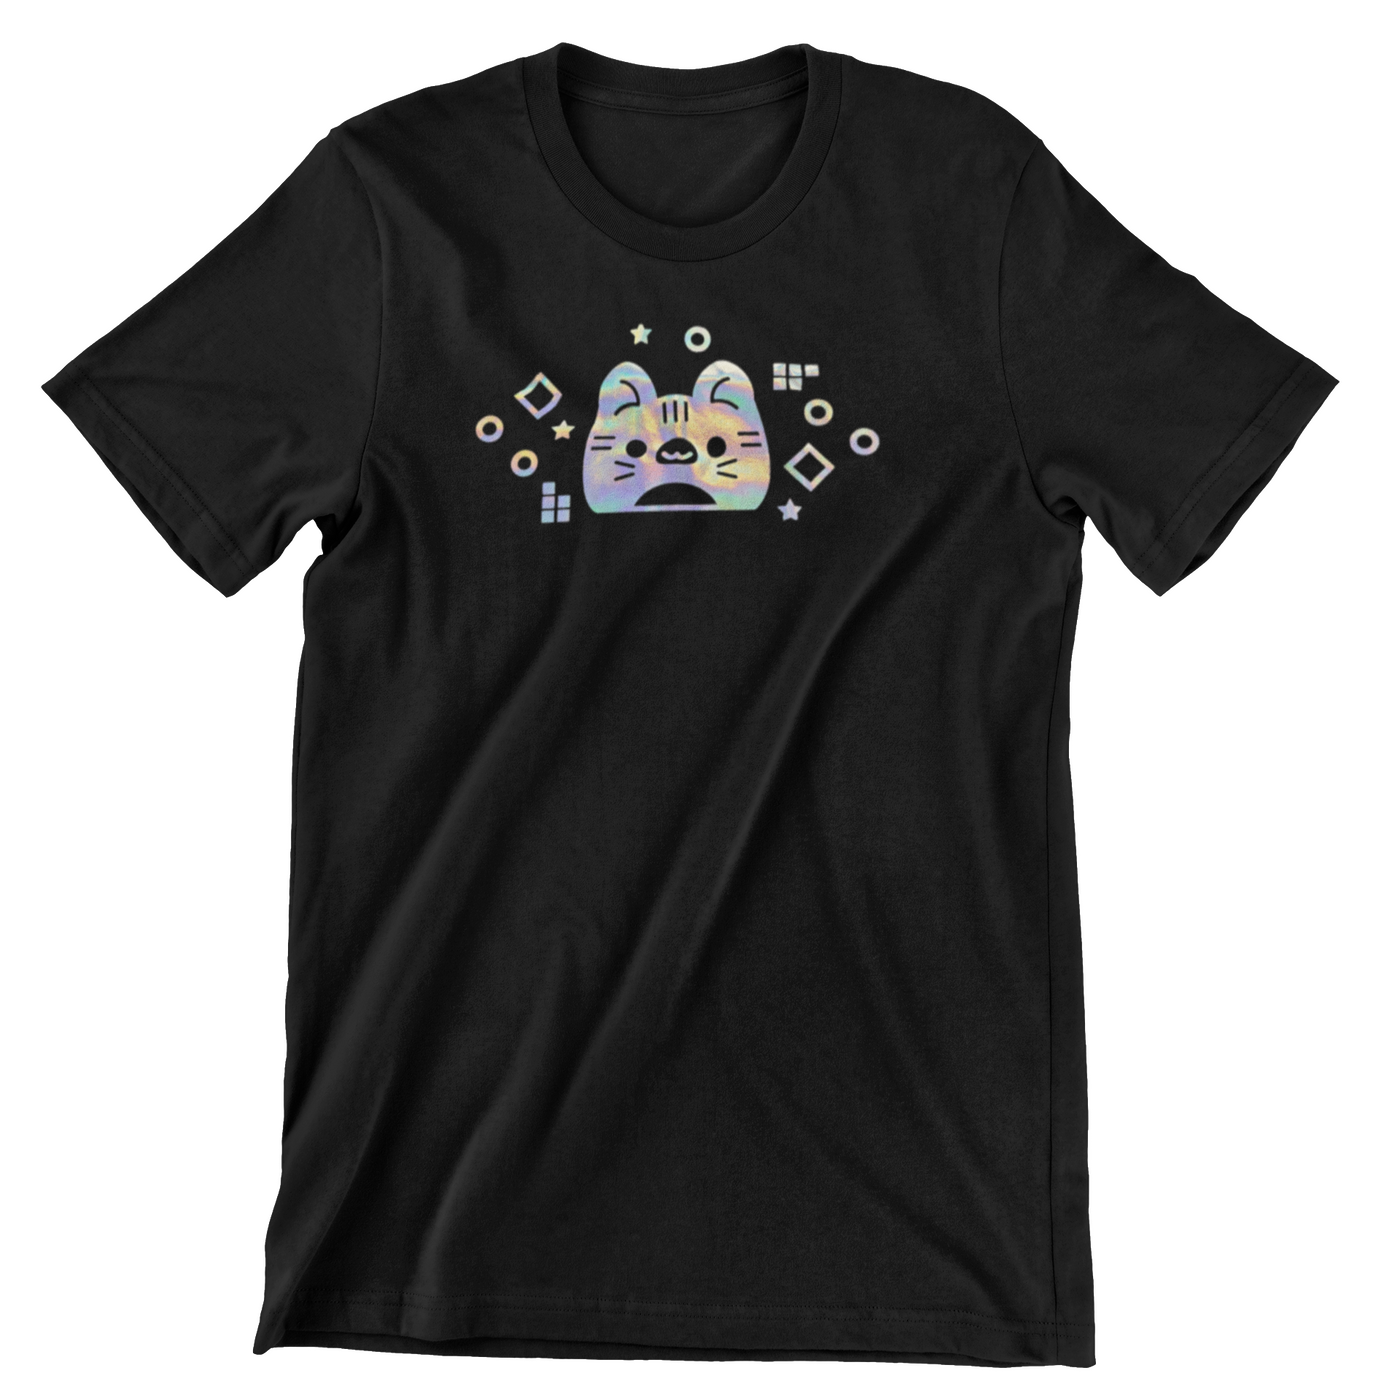 Juniper - Holographic Foil Shirt (Sold Out)